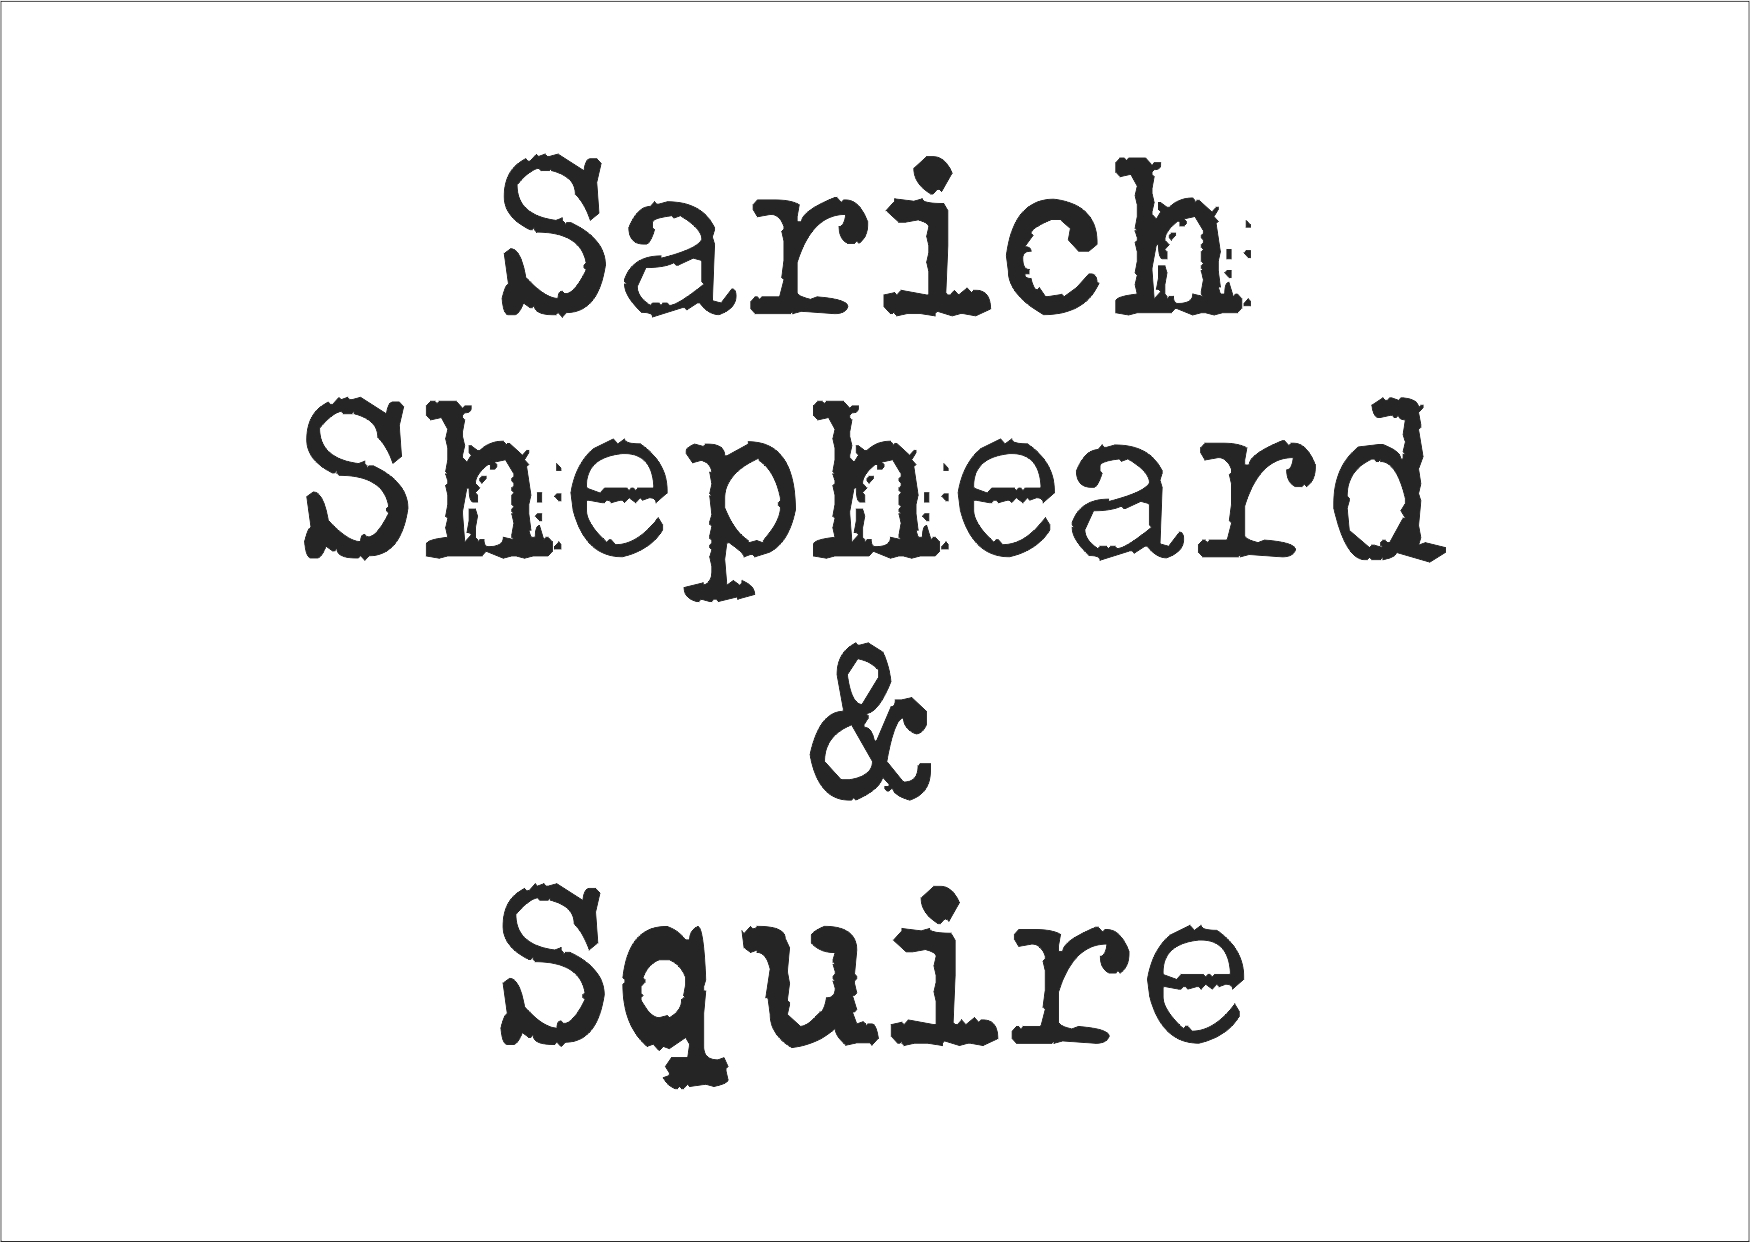 Sarich, Shepheard & Squire